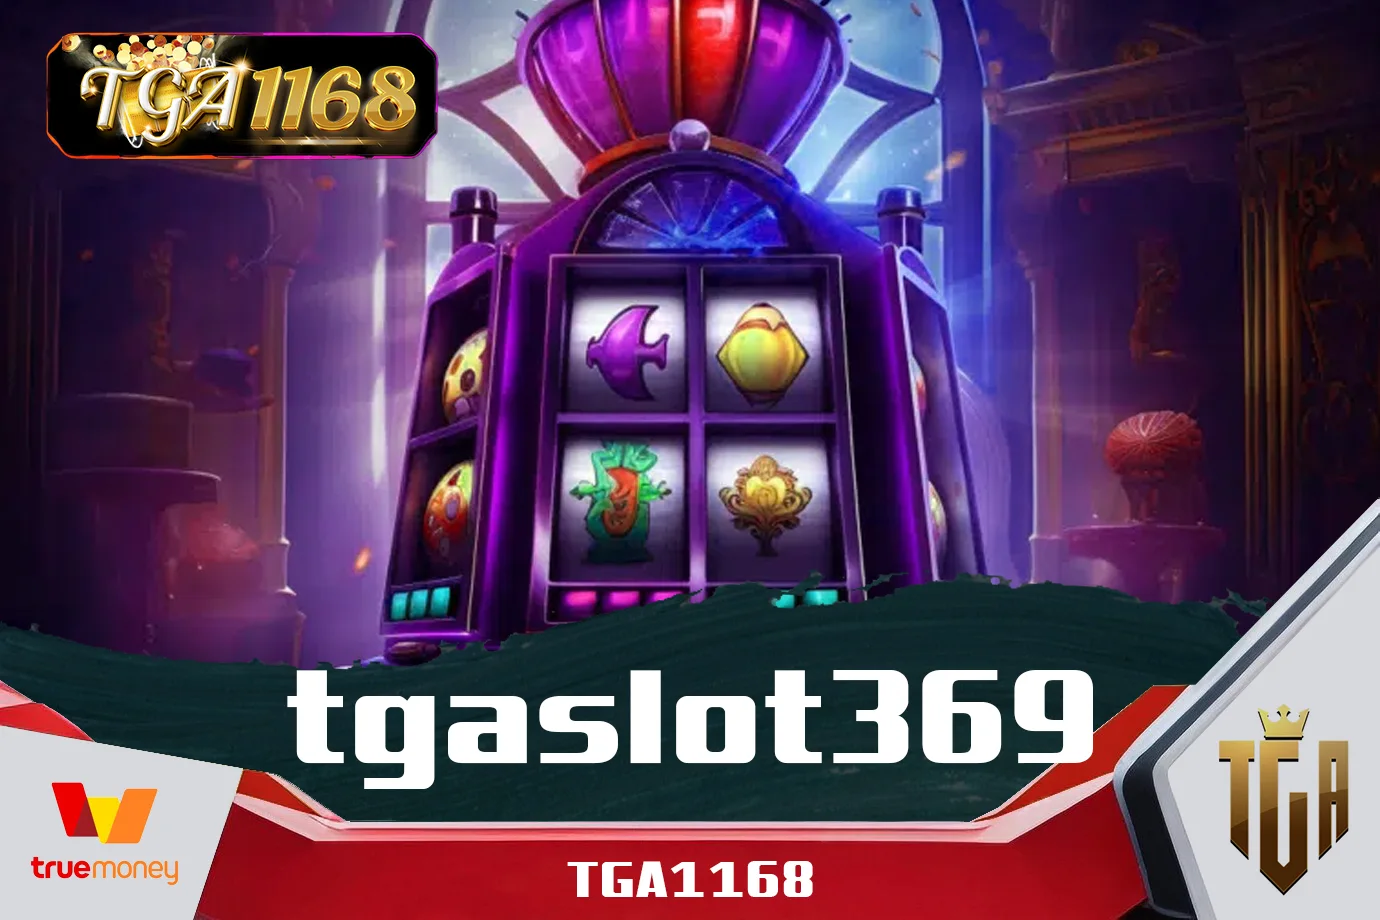 tgaslot-369